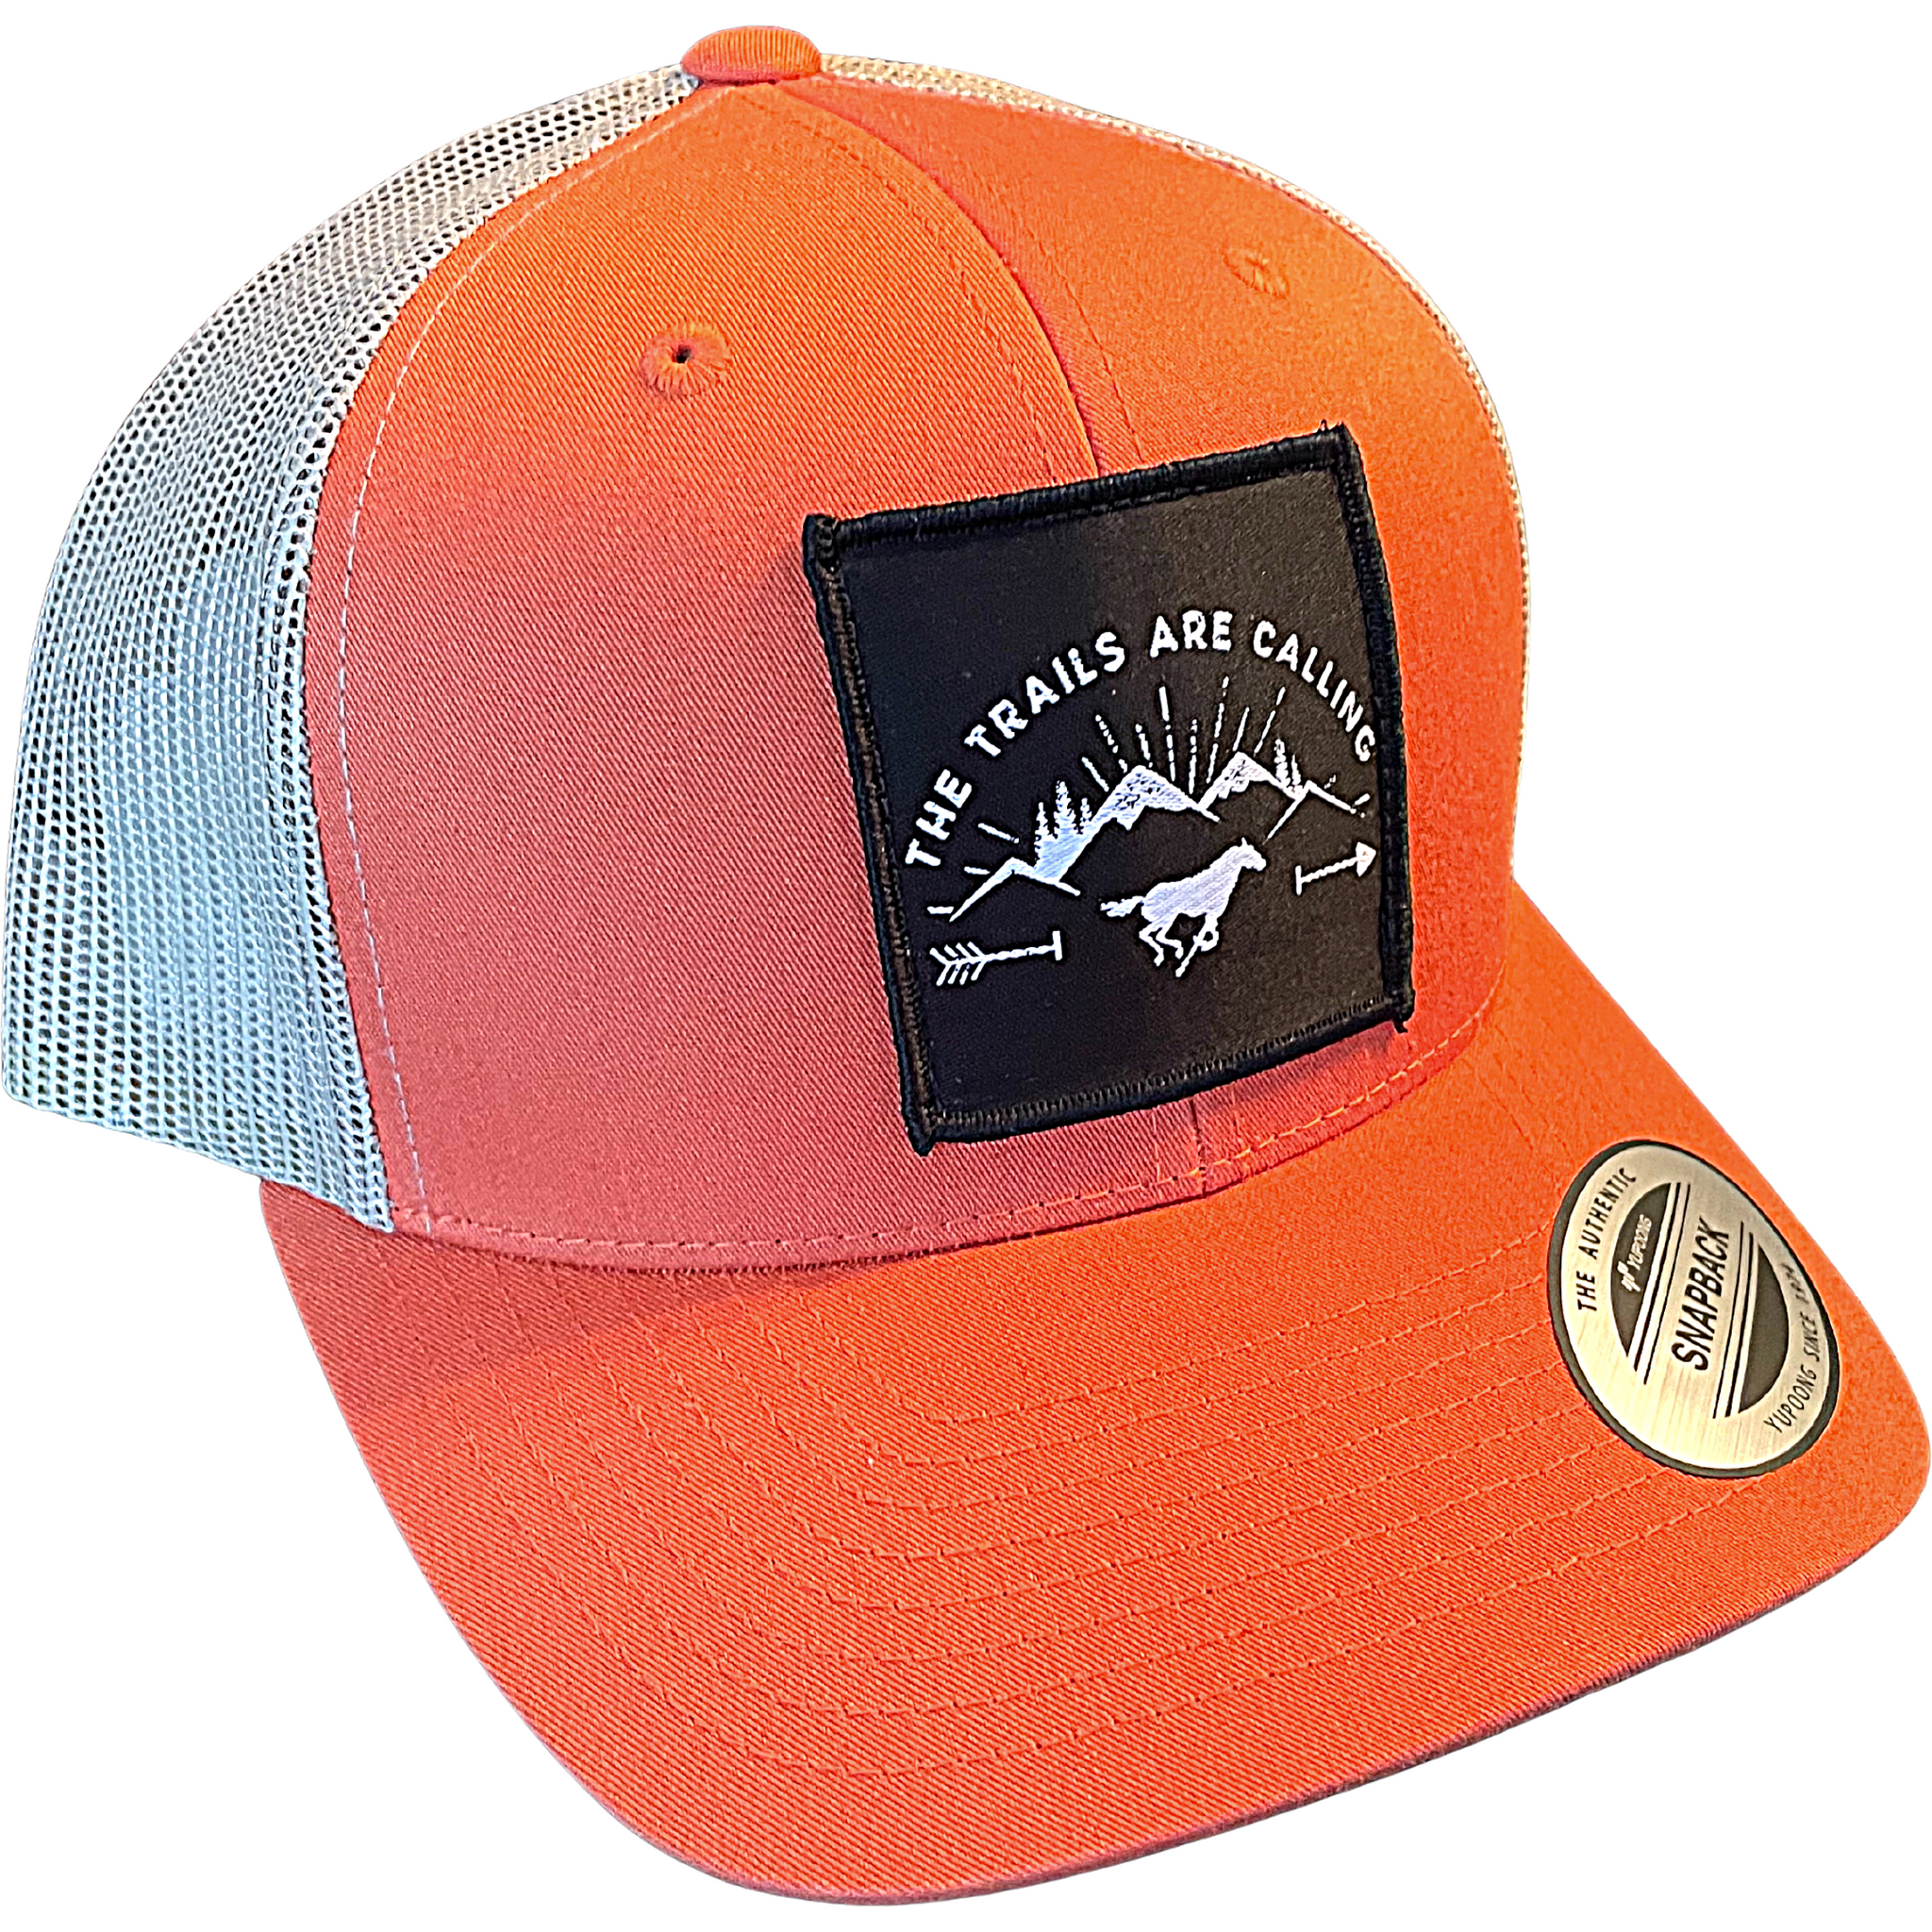 Fish Brand Logo Night Out Woven Patch Snapback Trucker Hat Dark Gray/Orange